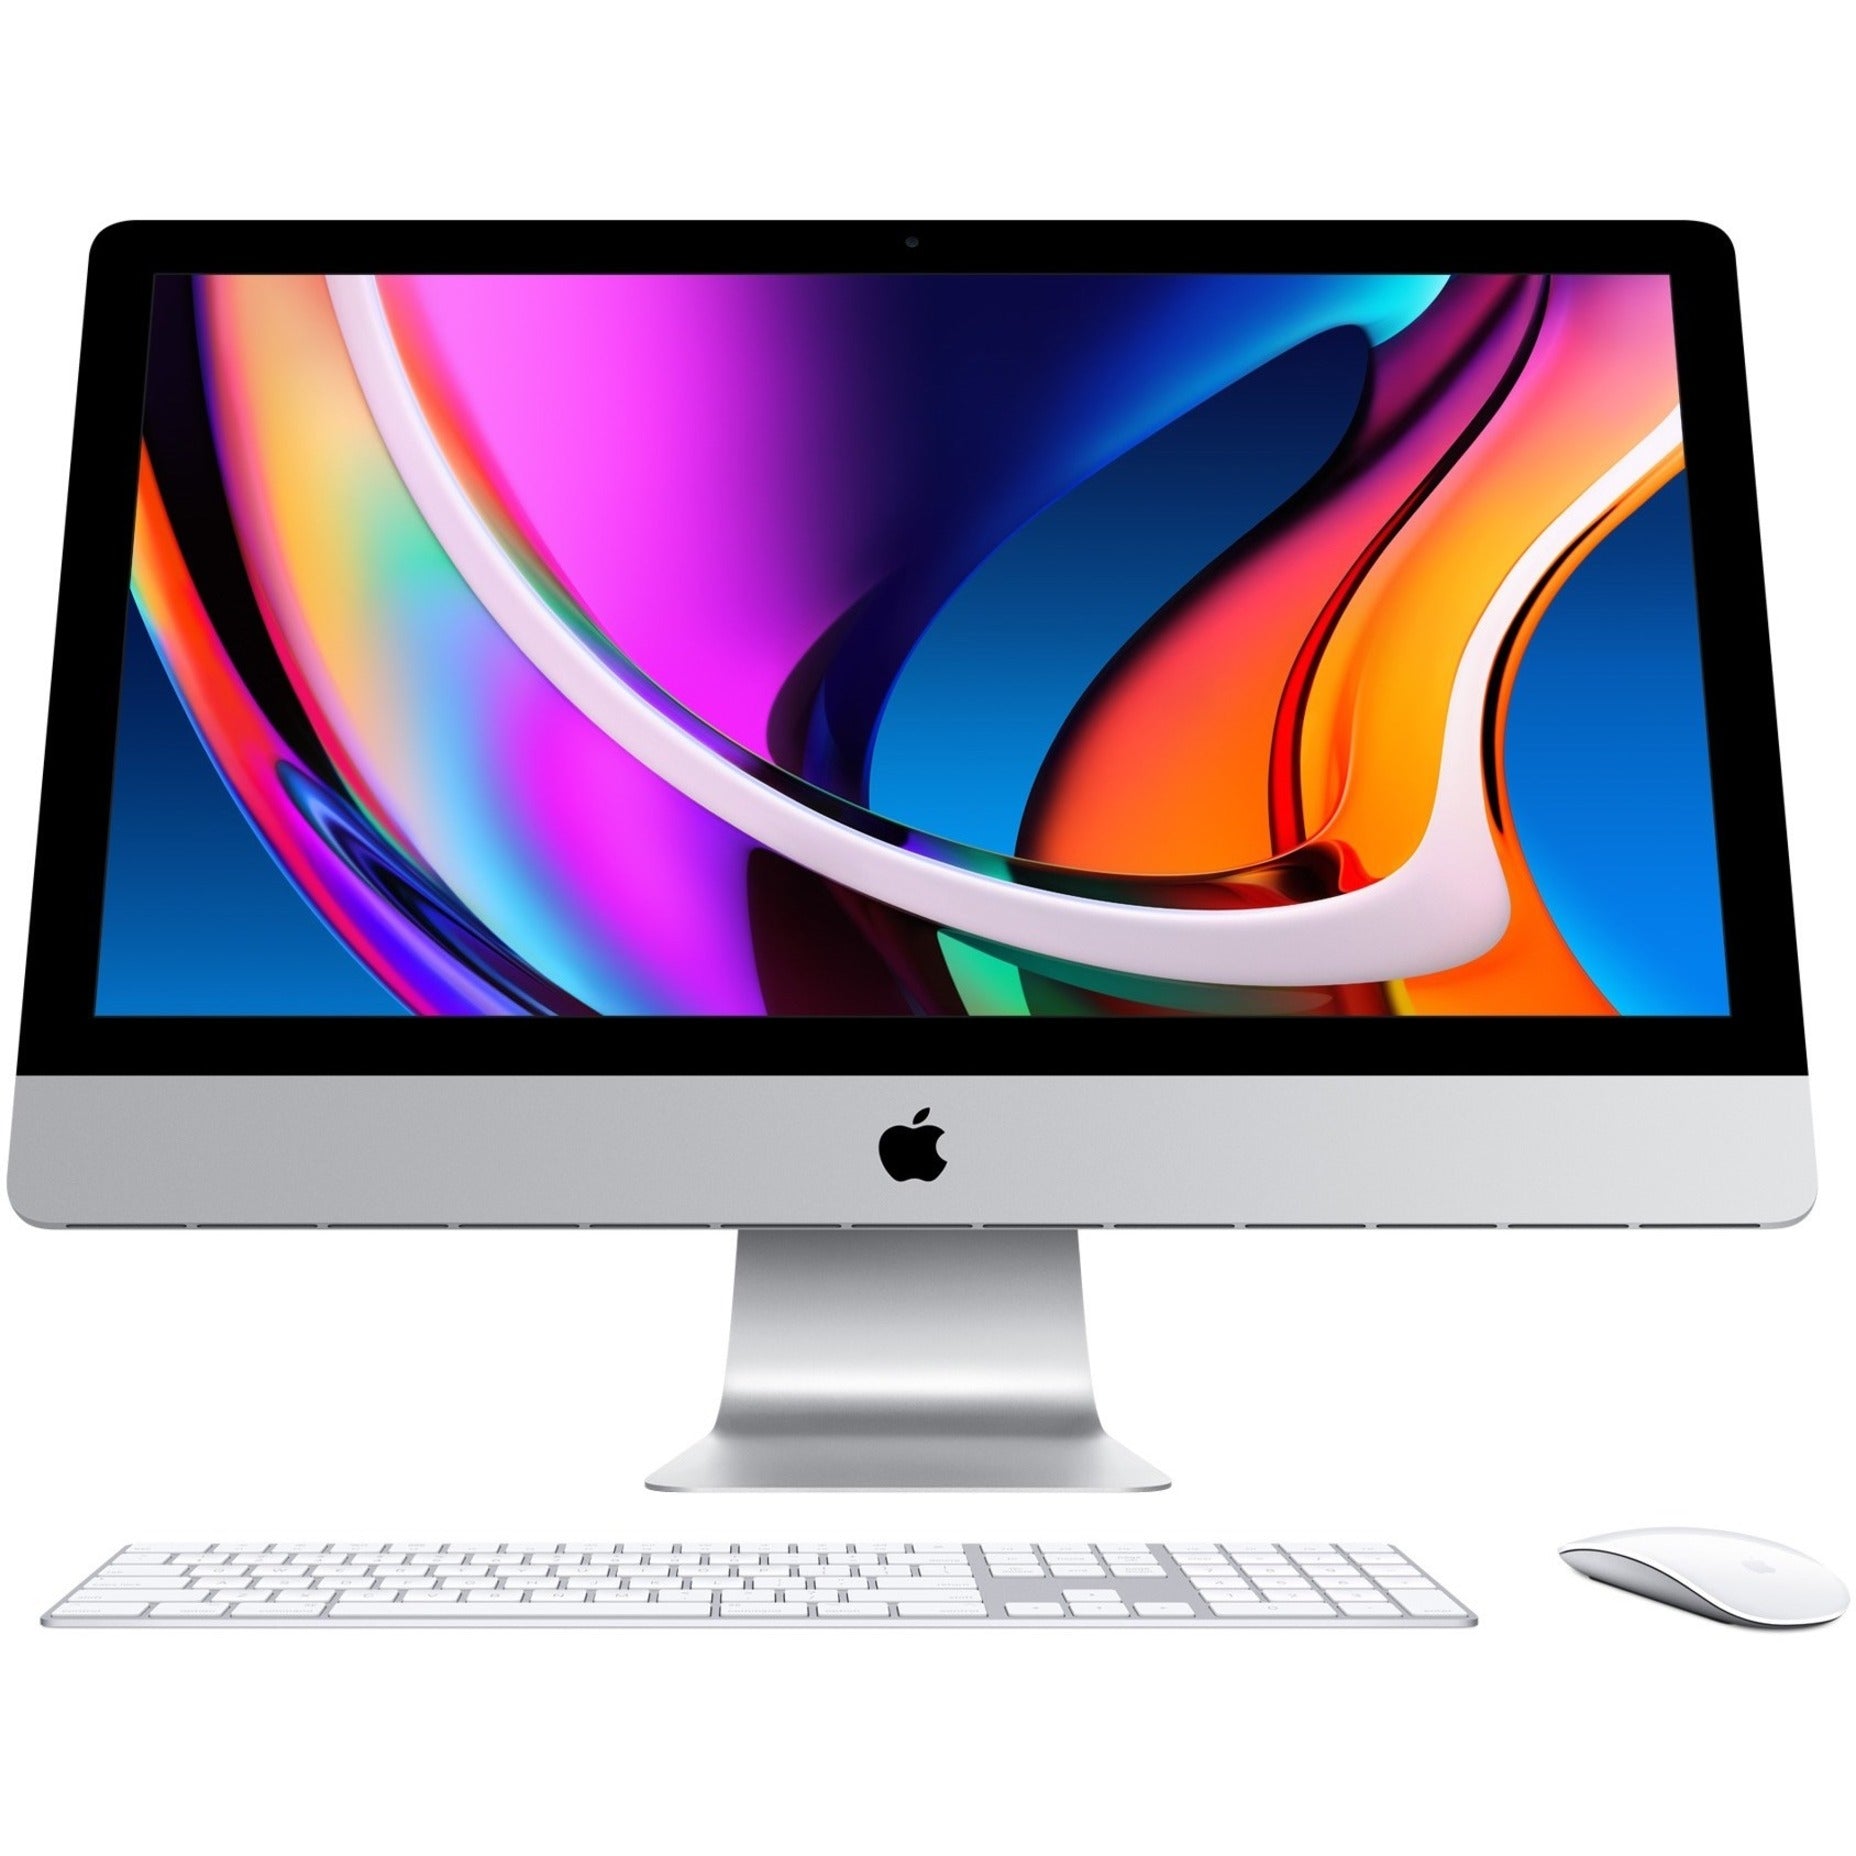 Apple MXWT2LL/A iMac 27in 3.1GHz 10th Gen i5, Retina 5K Display, 256GB - All-in-One Computer